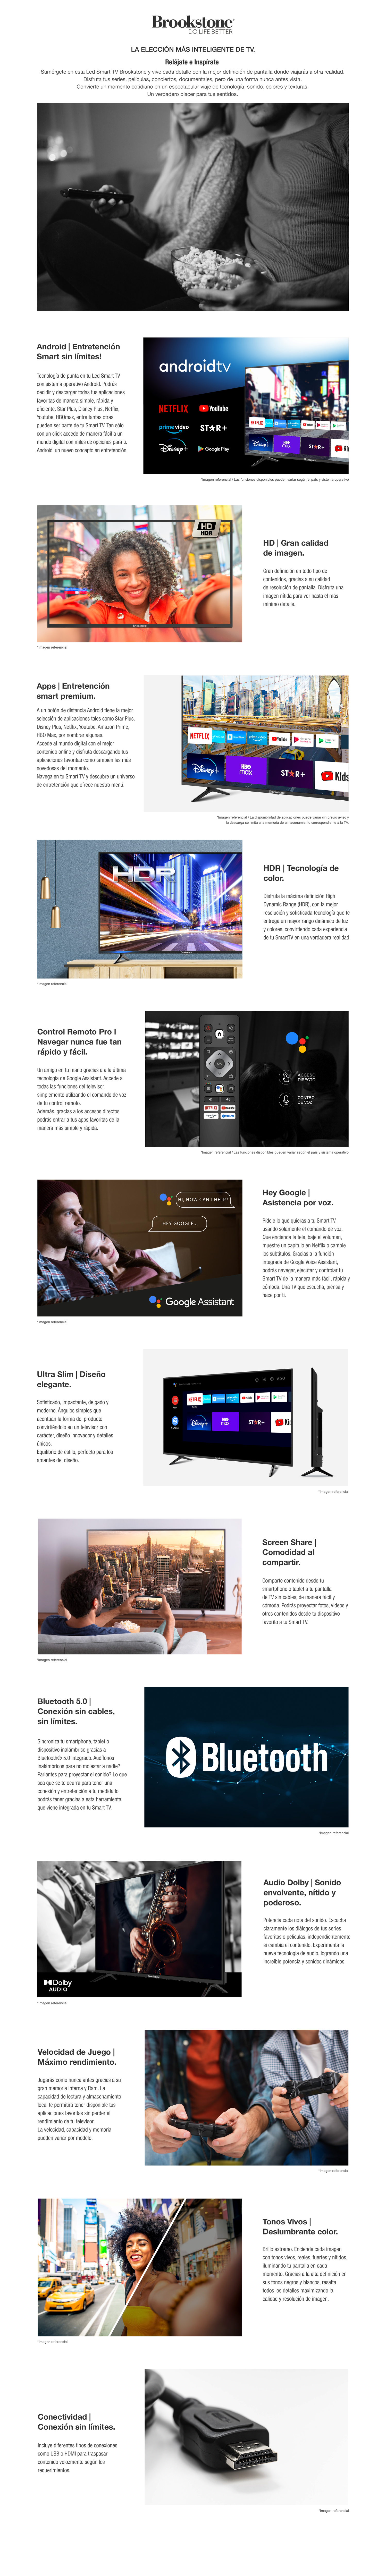 Brookstone HD Smart TV Android 32